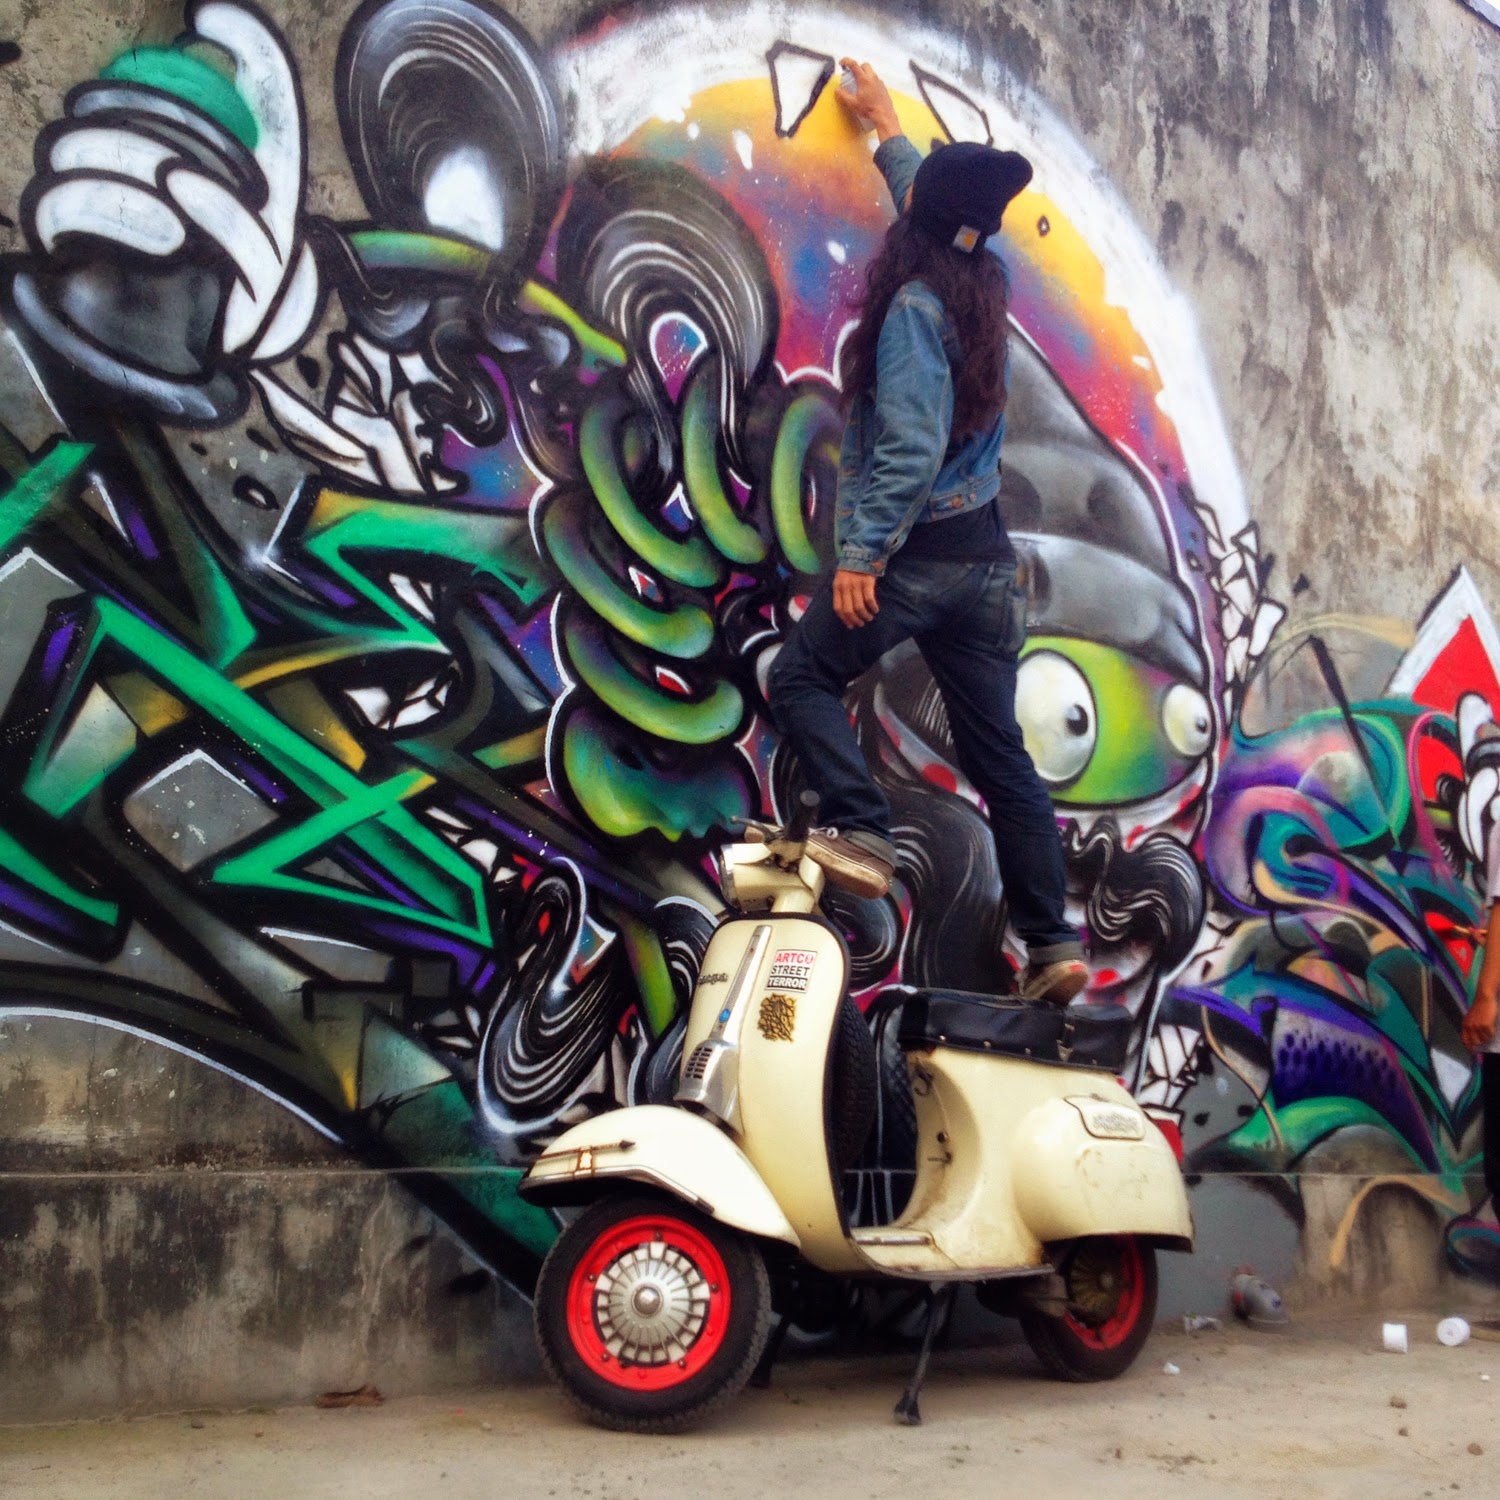 TUYULOVEME seniman graffiti senior Yogyakarta sedang beraksi diatas Vespanya